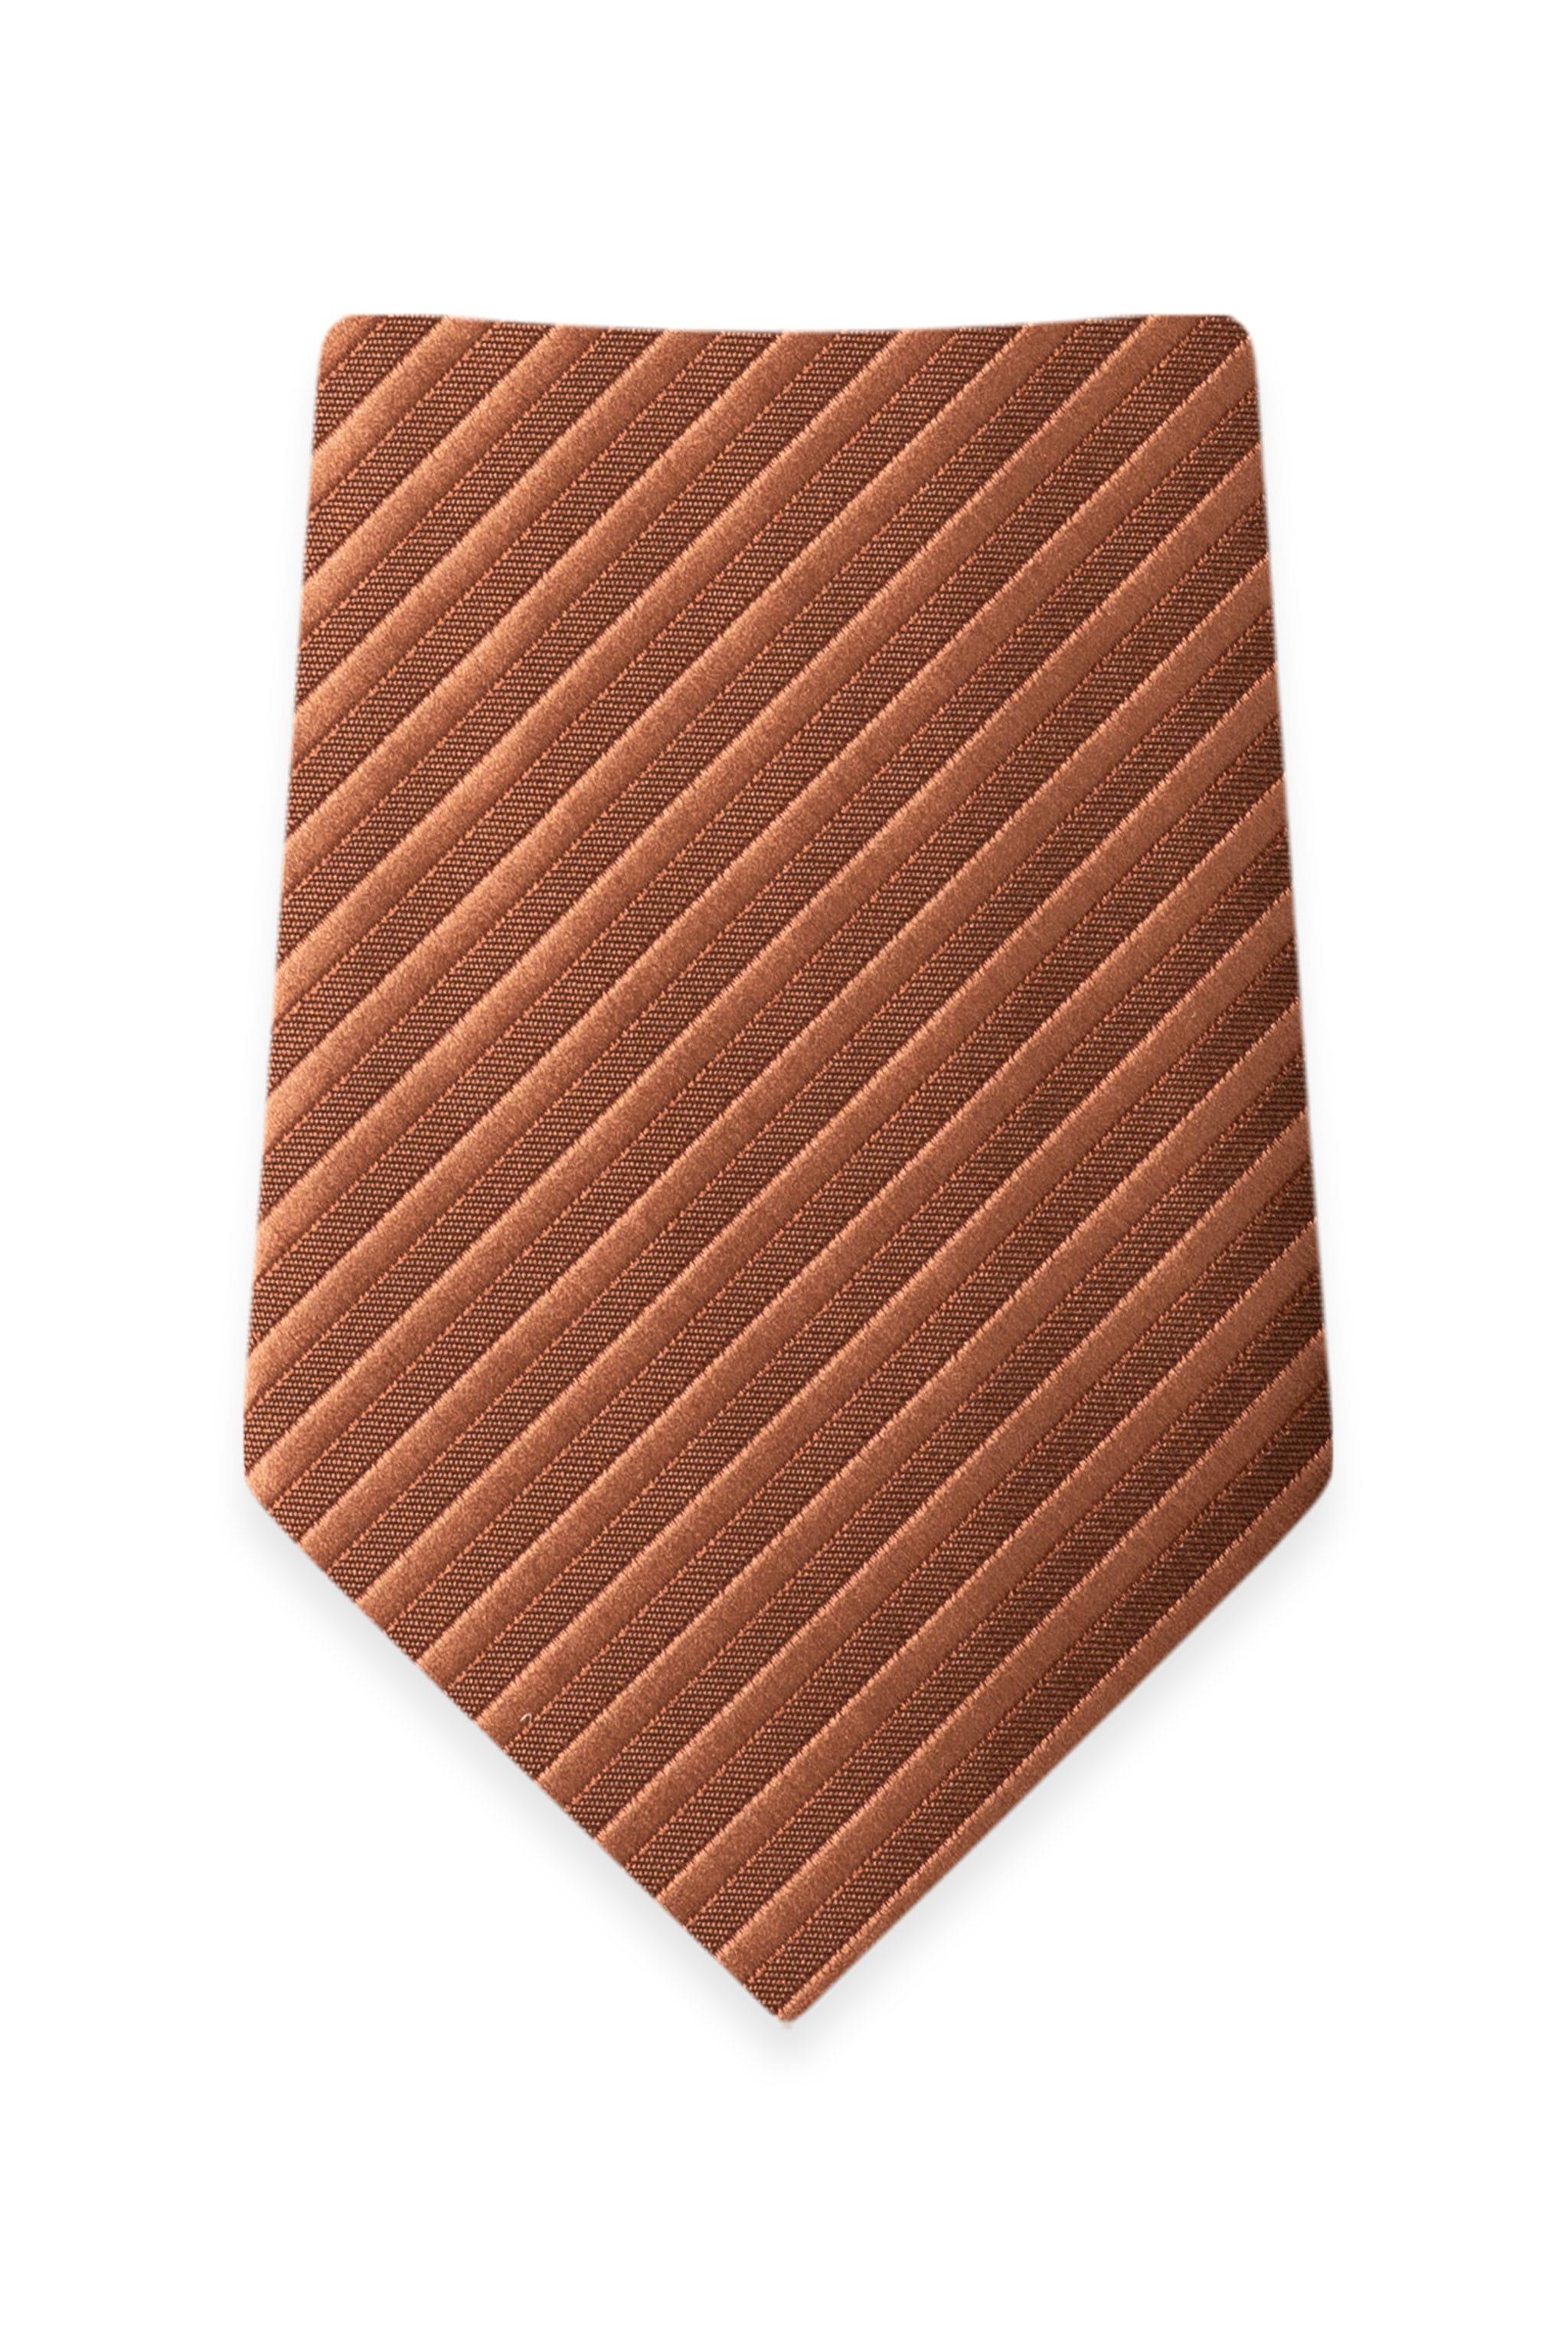 Striped Spice Self-Tie Windsor Tie